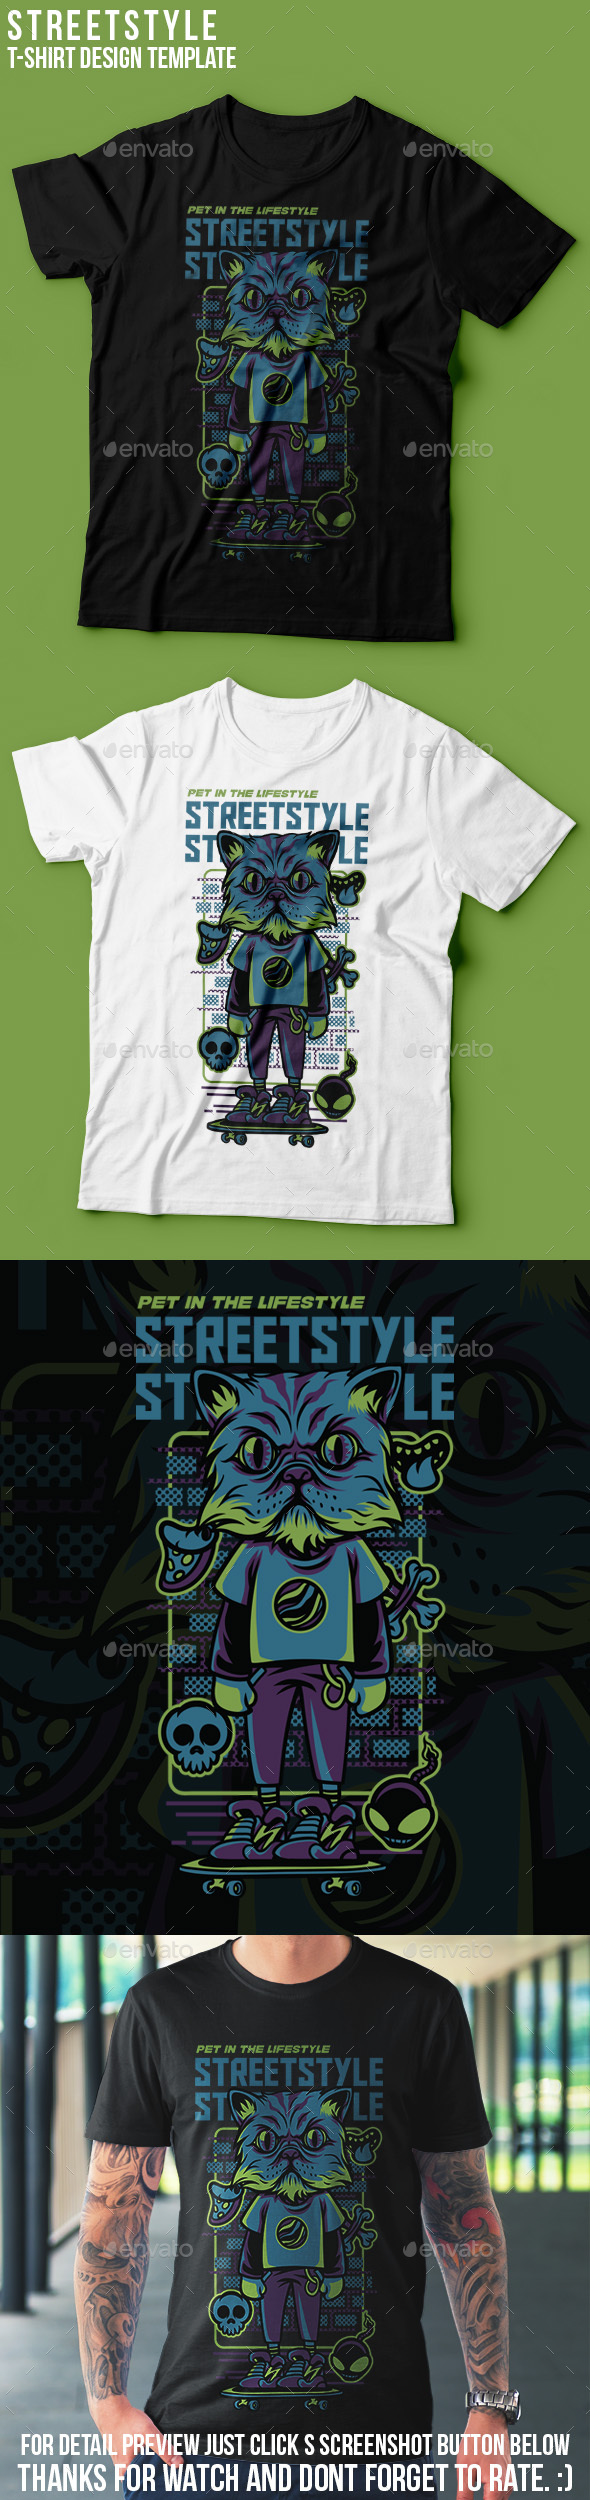 Street Style T-Shirt Design